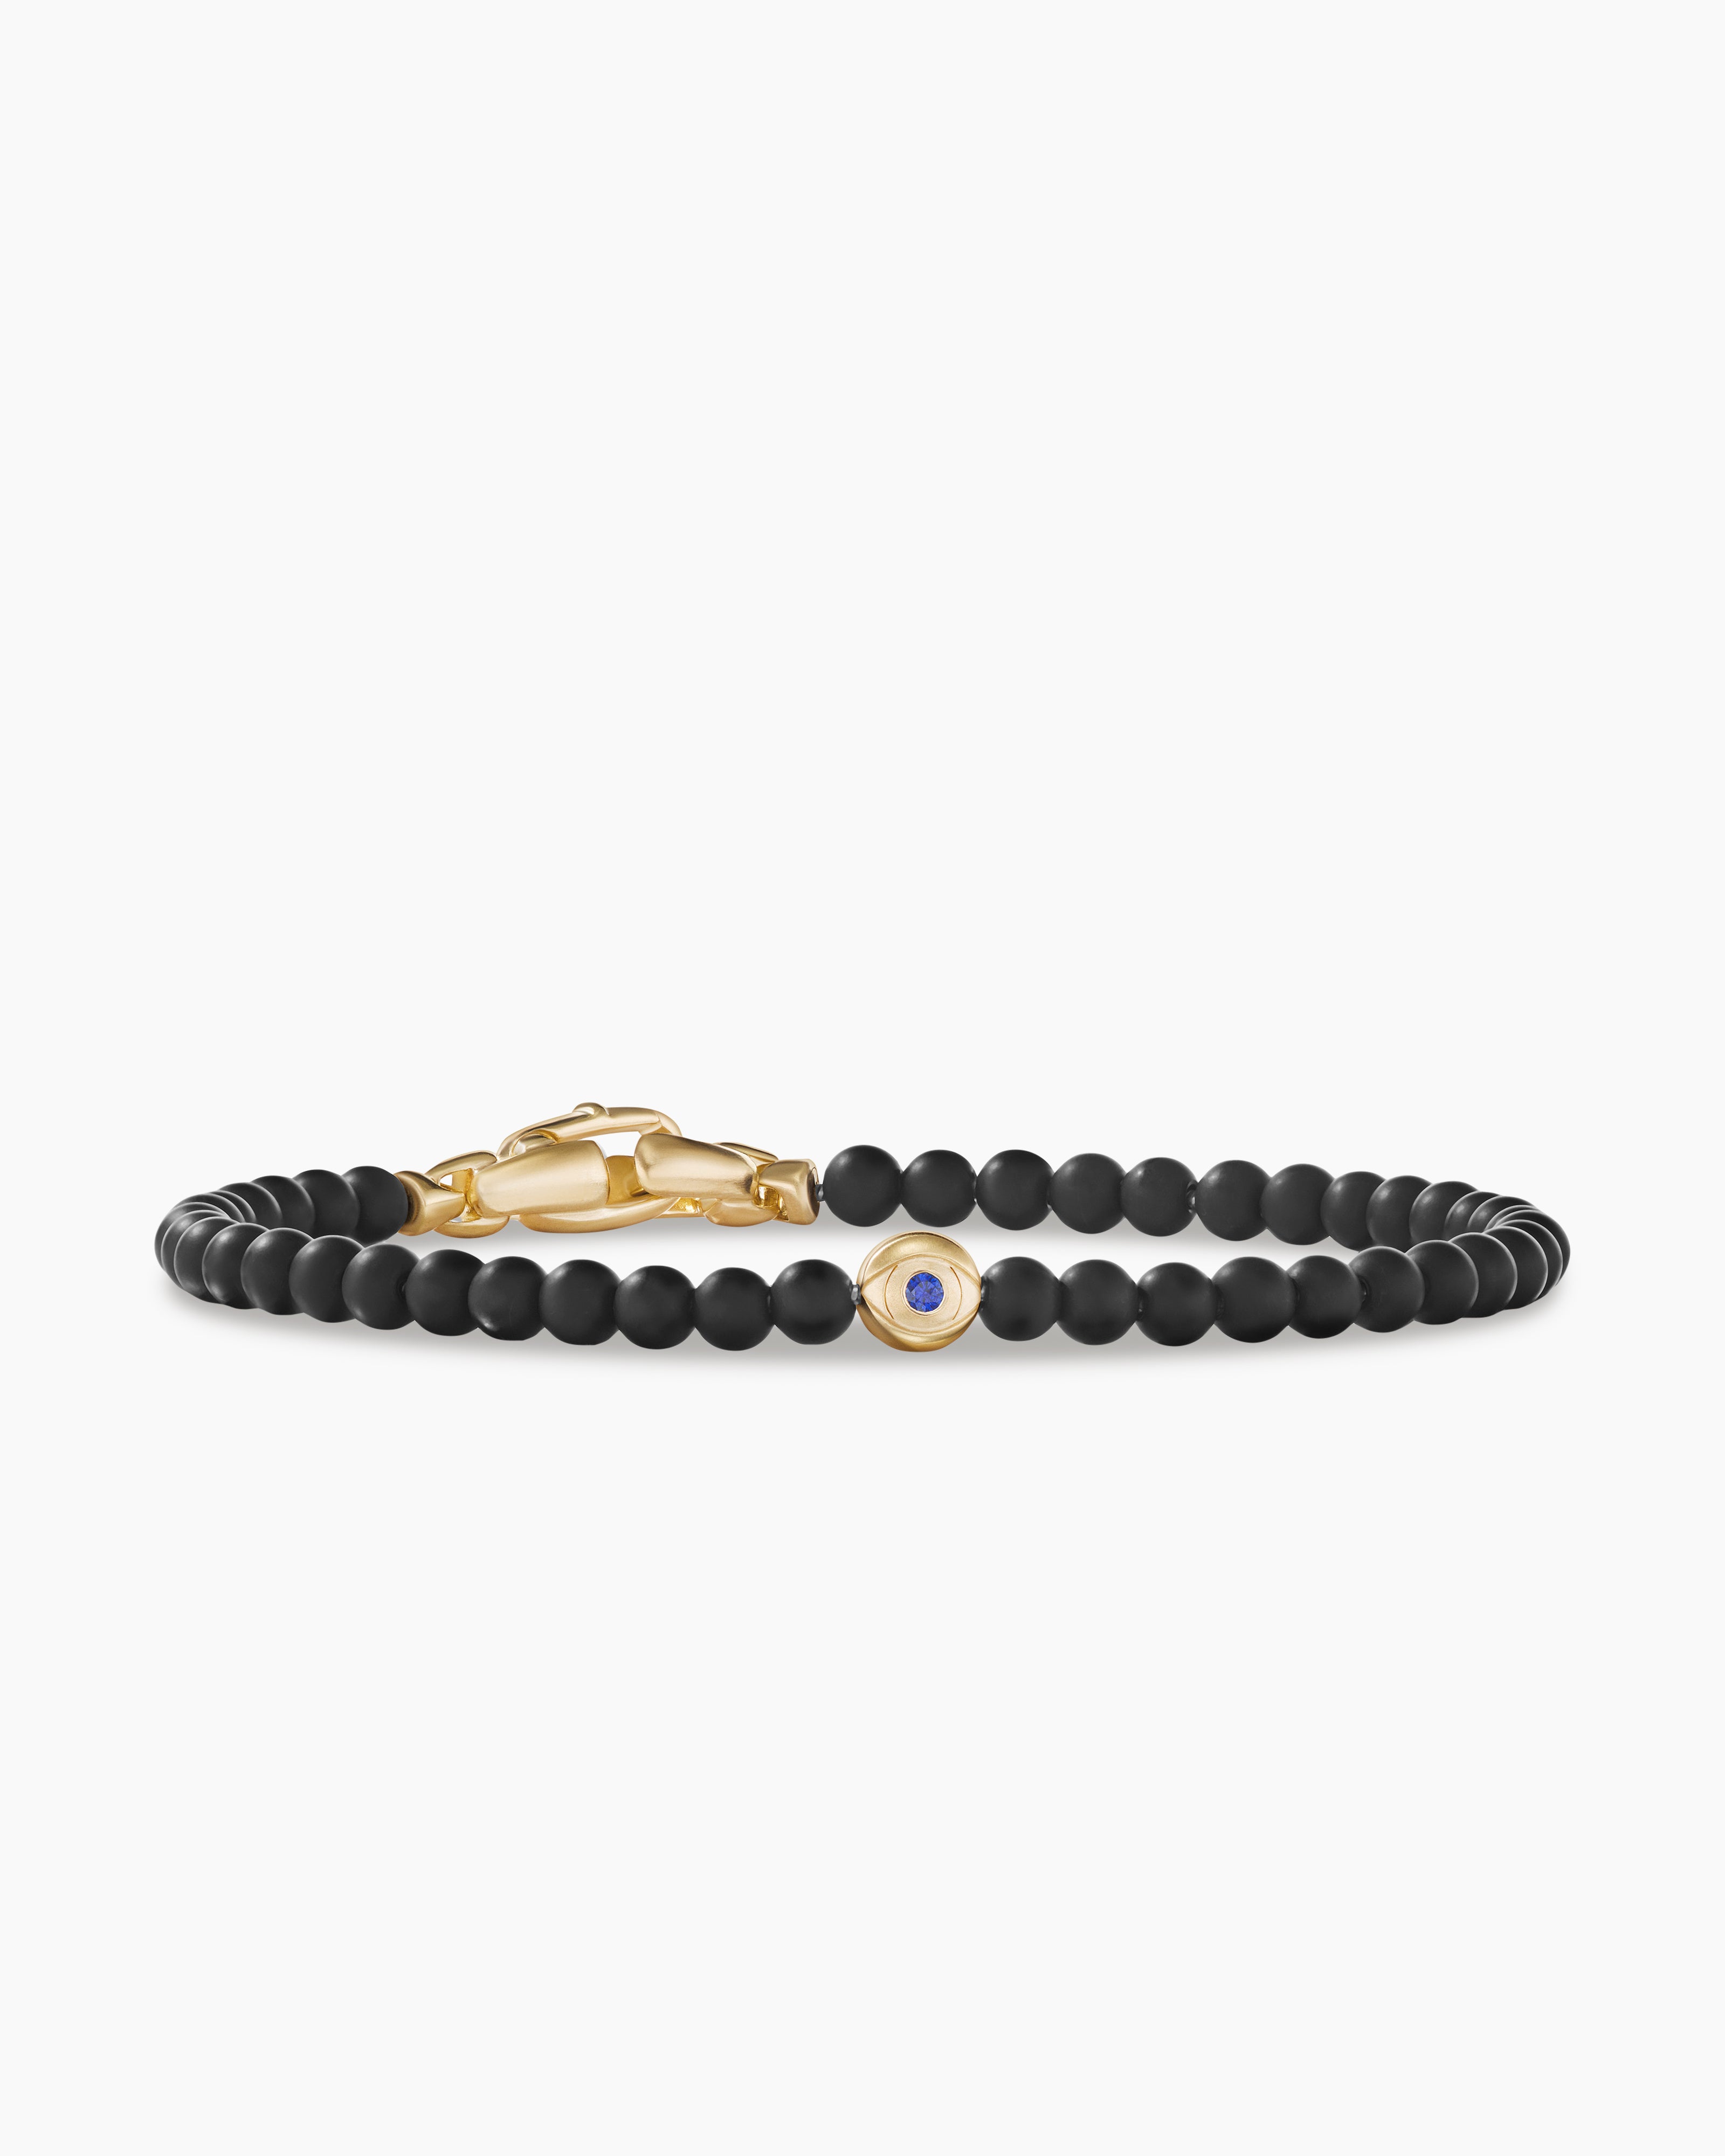 Spiritual Beads Evil Eye Bracelet with 18K Yellow Gold, 4mm